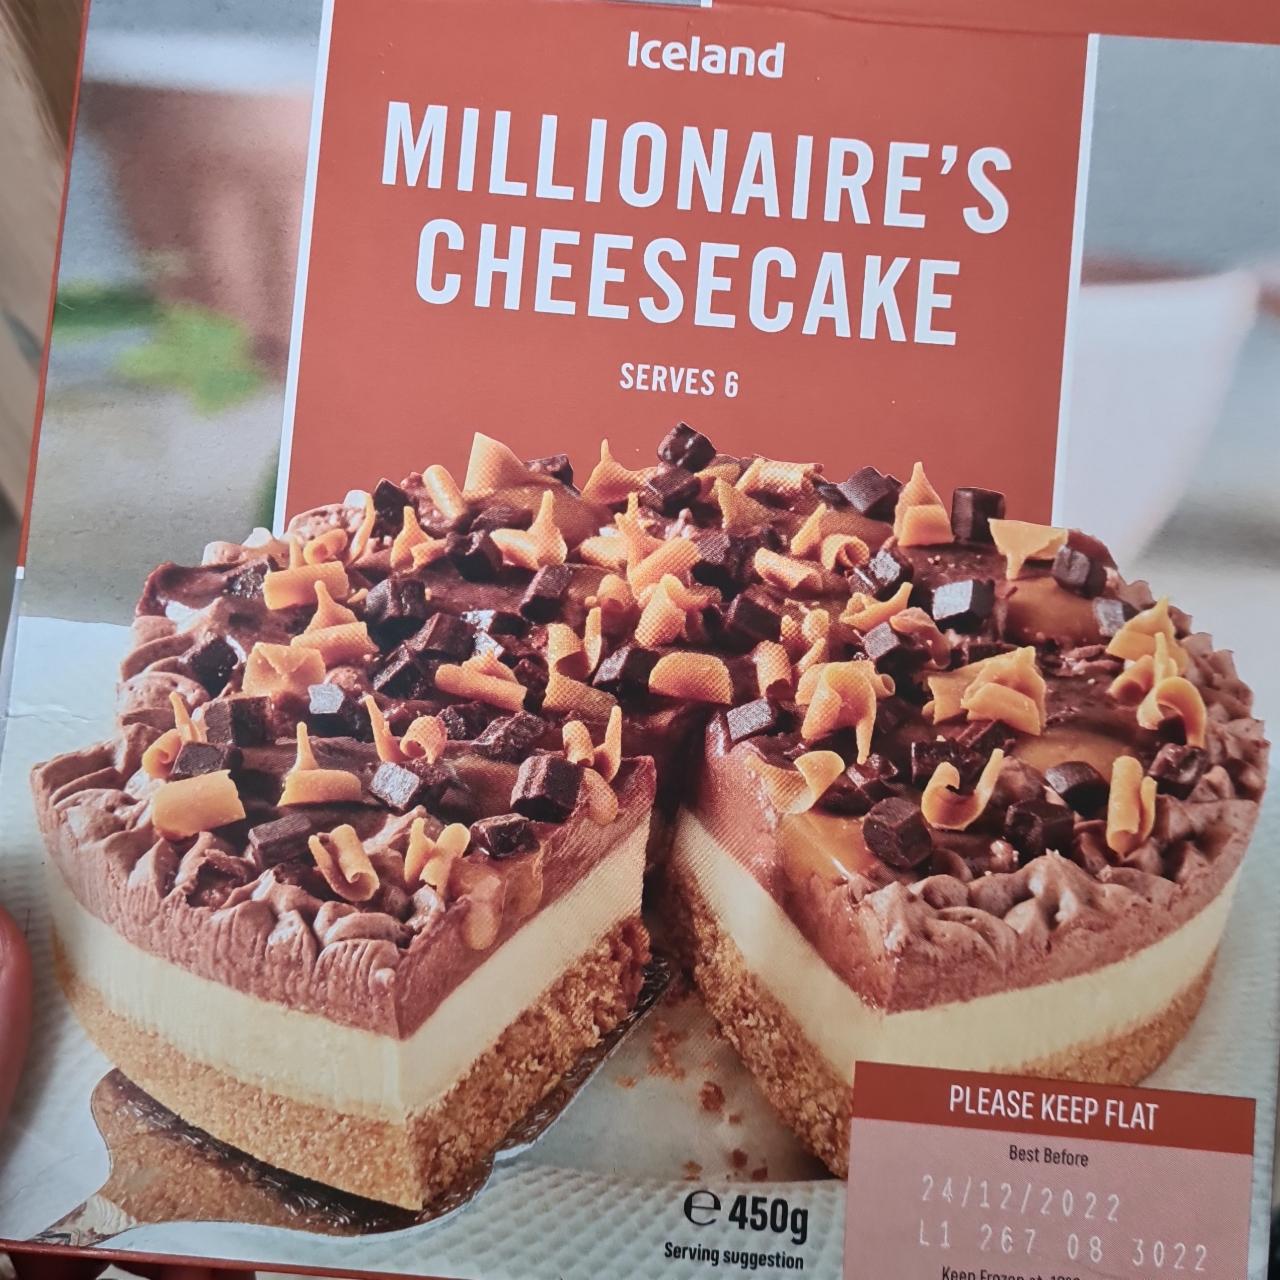 Fotografie - Millionaire's Cheesecake Iceland